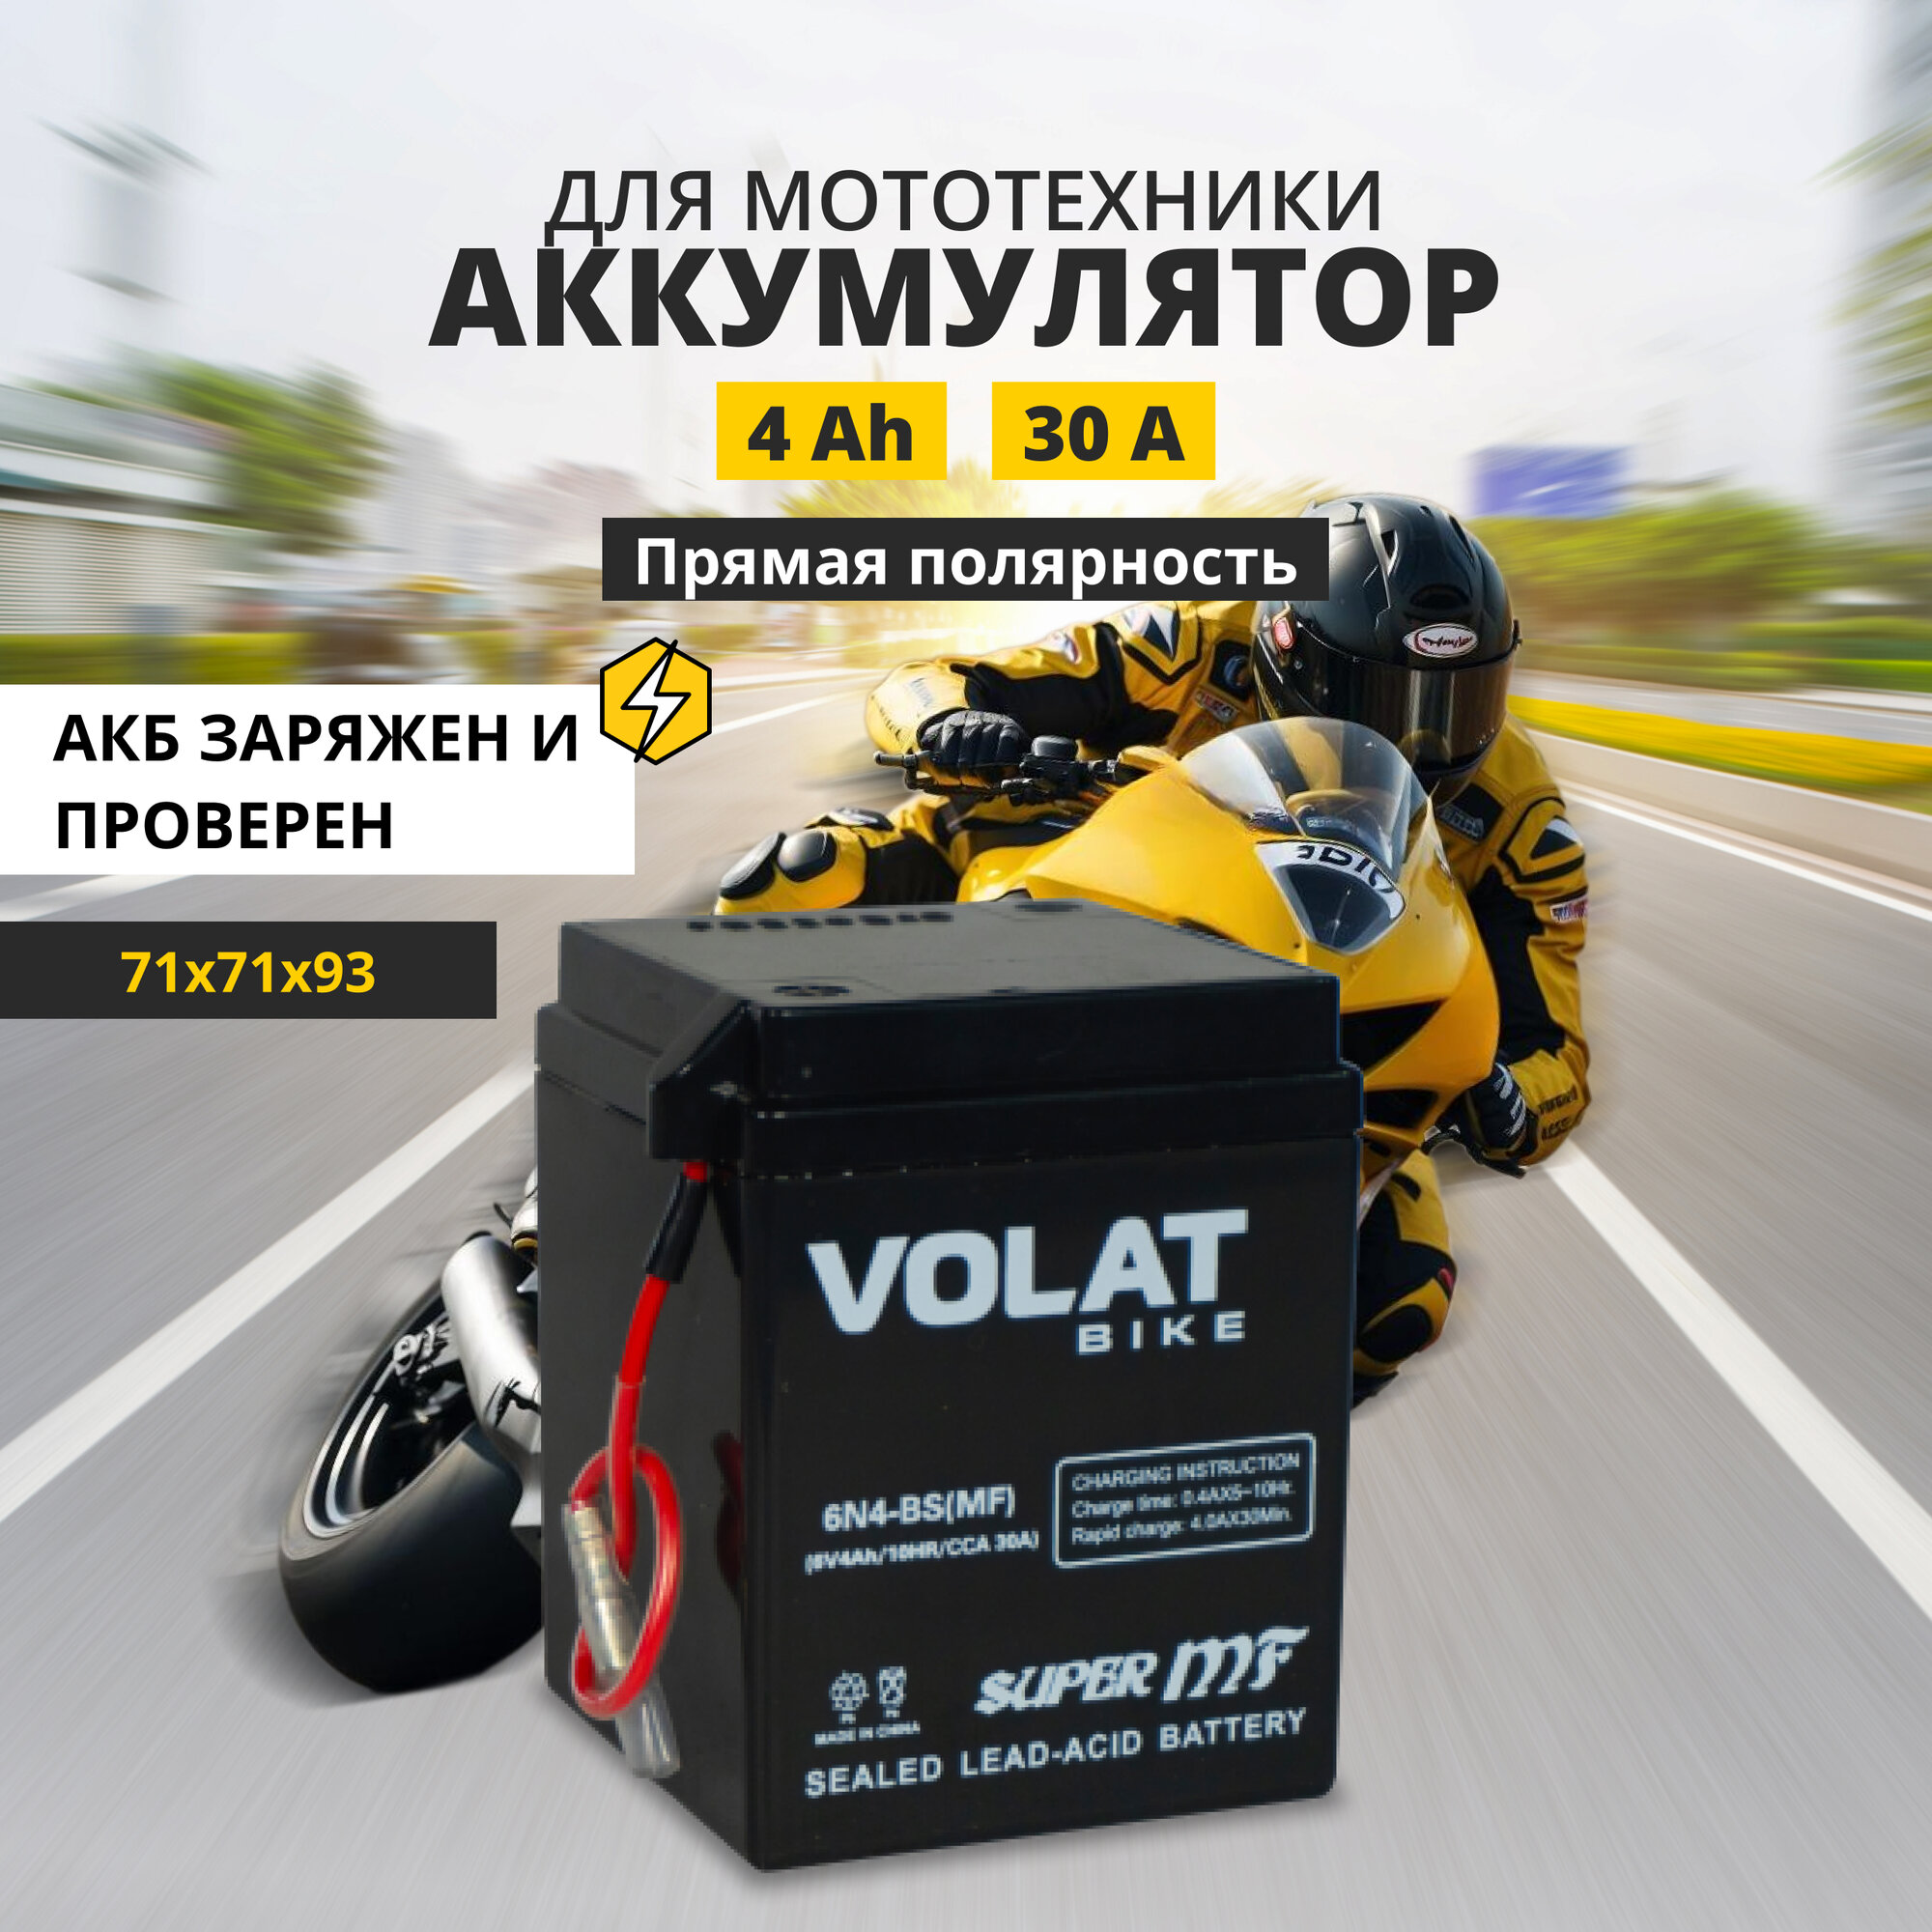 Аккумулятор для мотоцикла 6v Volat 6N4-BS(MF) прямая полярность 4 Ah 30 A AGM, акб на скутер, мопед, квадроцикл 71x71x93 мм